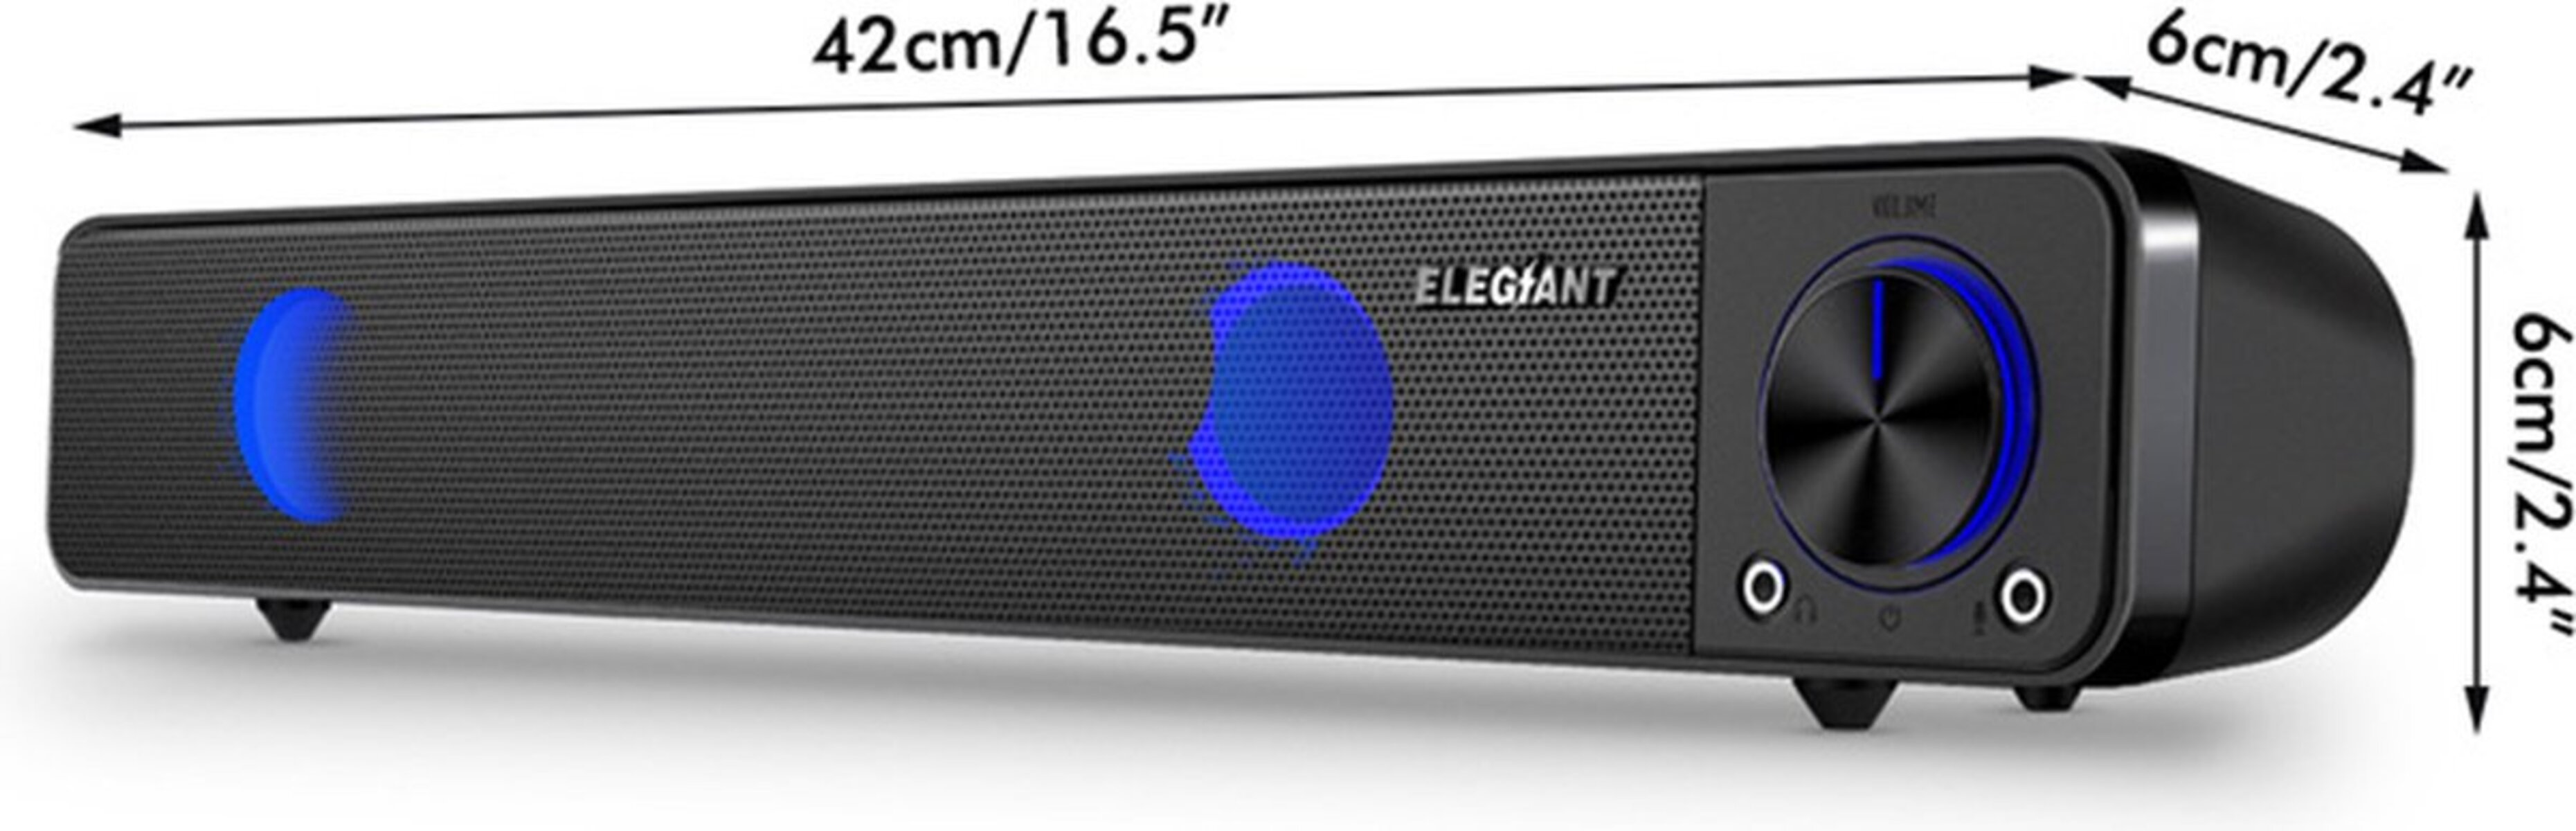 ELEGIANT Soundbar Gaming PC Lautsprecher für